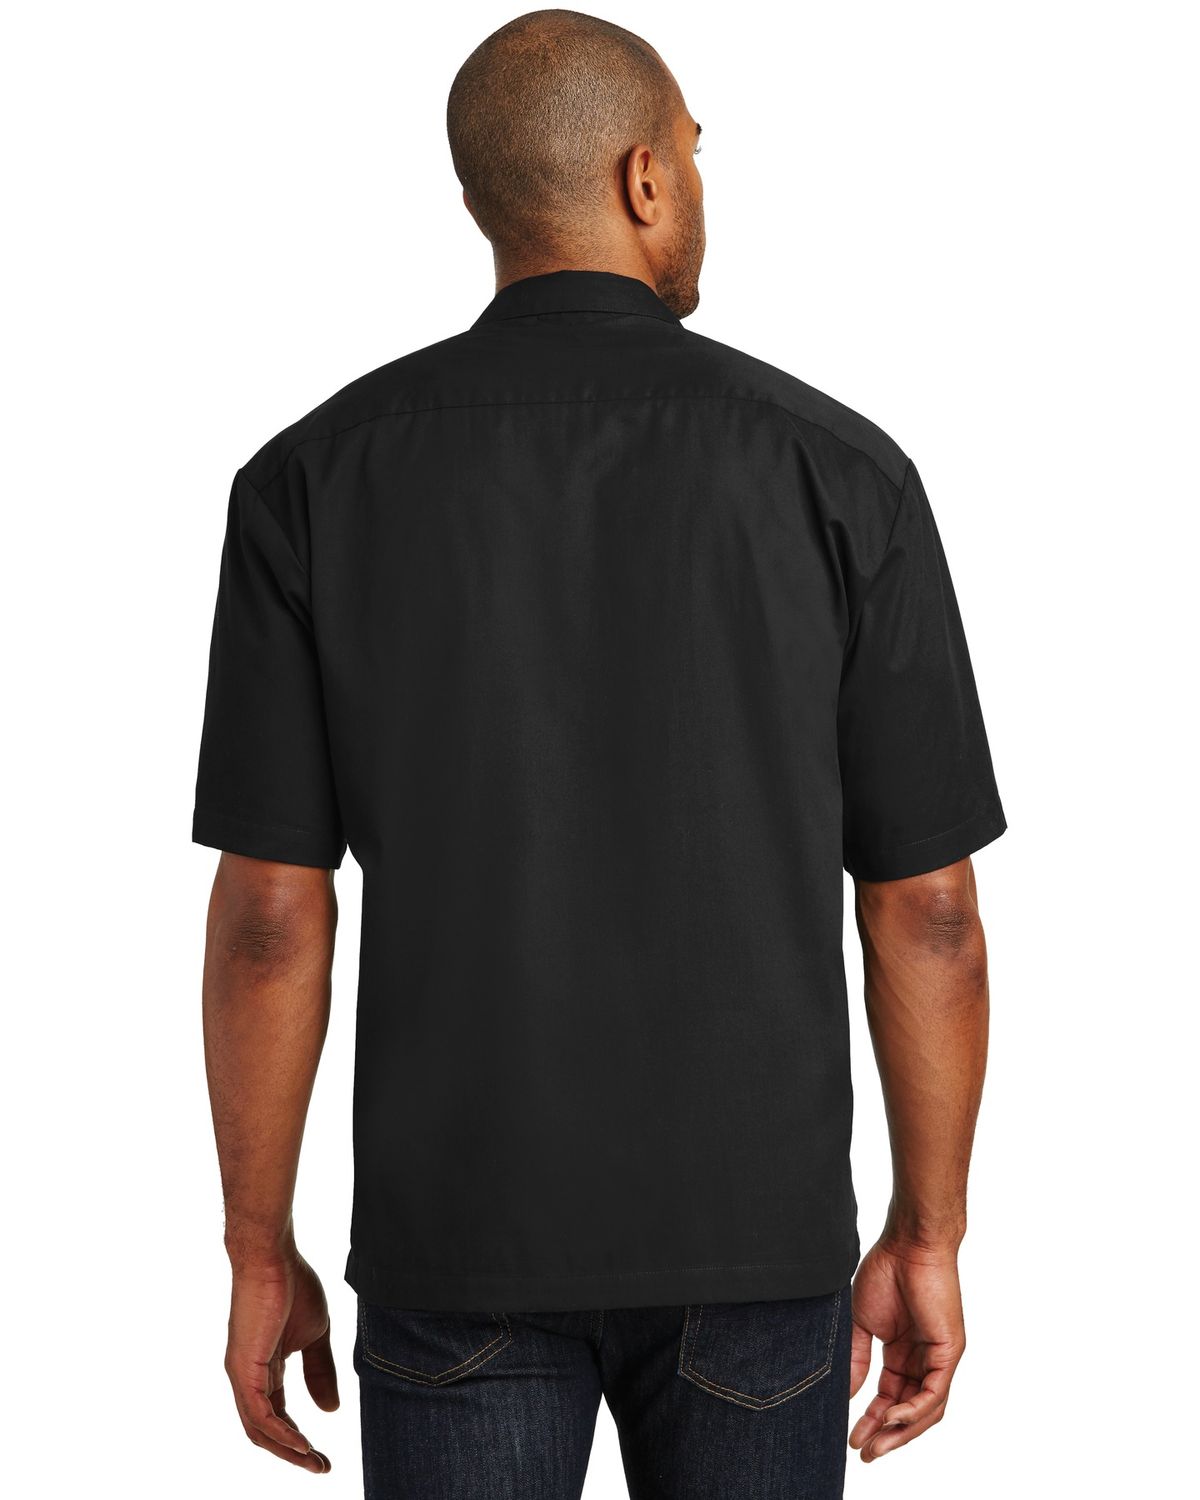 'Port Authority S300 Men’s Retro Camp Short Sleeve Shirt'